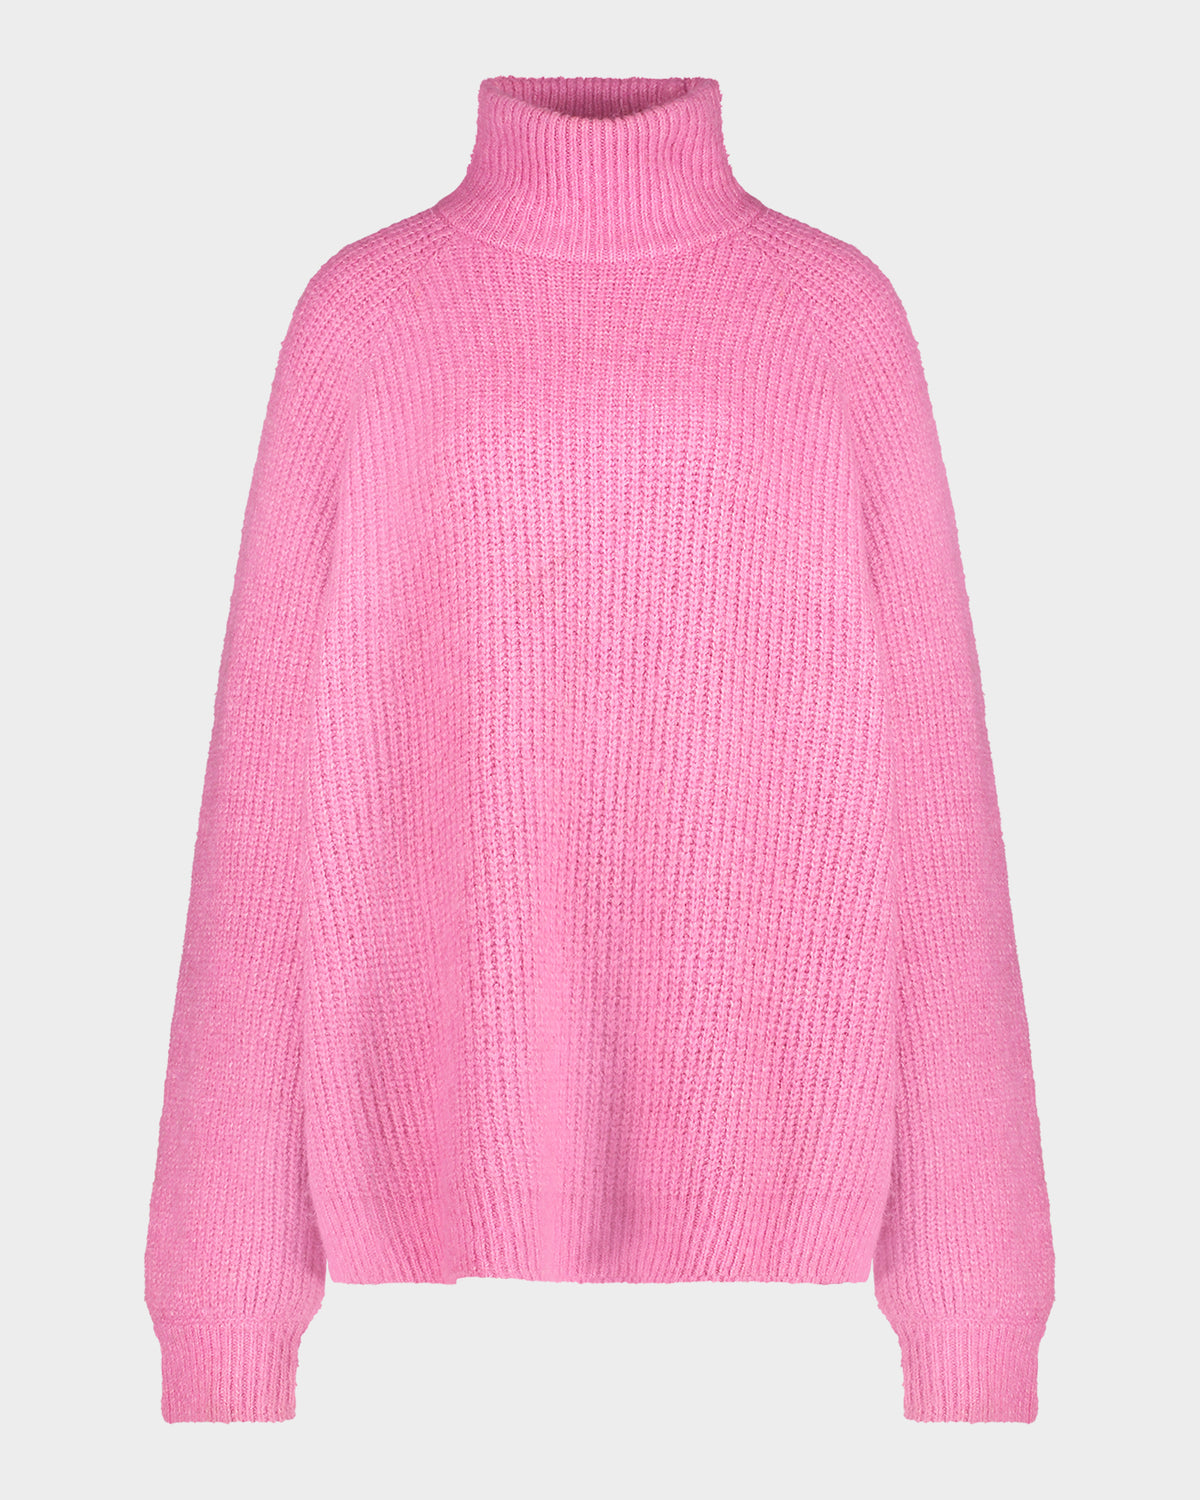 Otavia Knitted Sweater